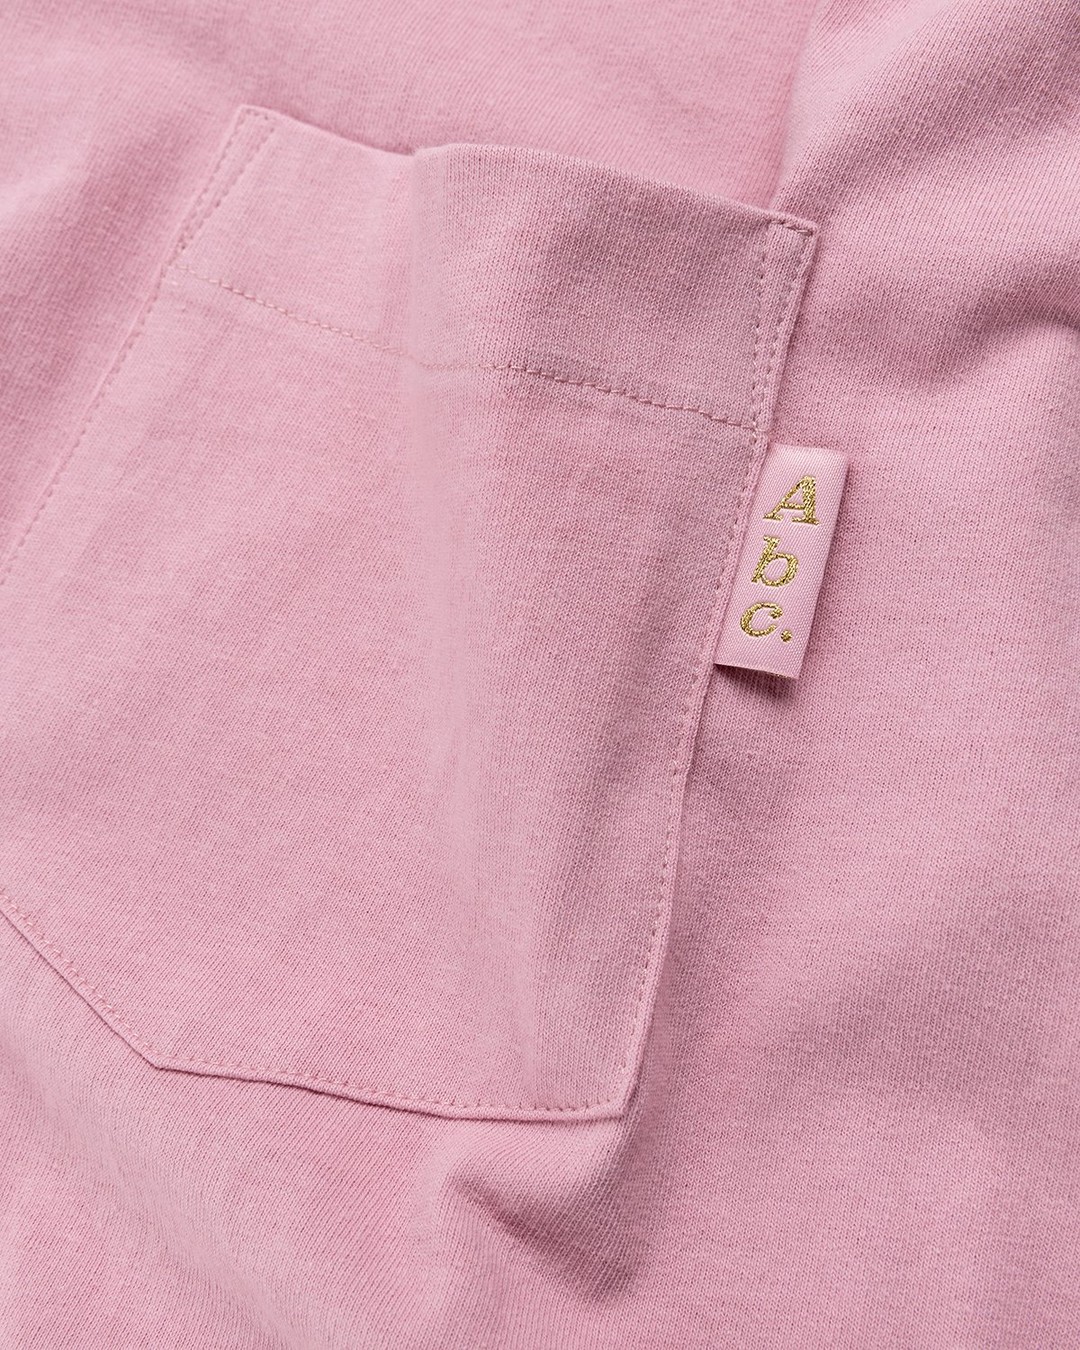 Abc. – Short-Sleeve Pocket Tee Morganite - Tops - Pink - Image 5